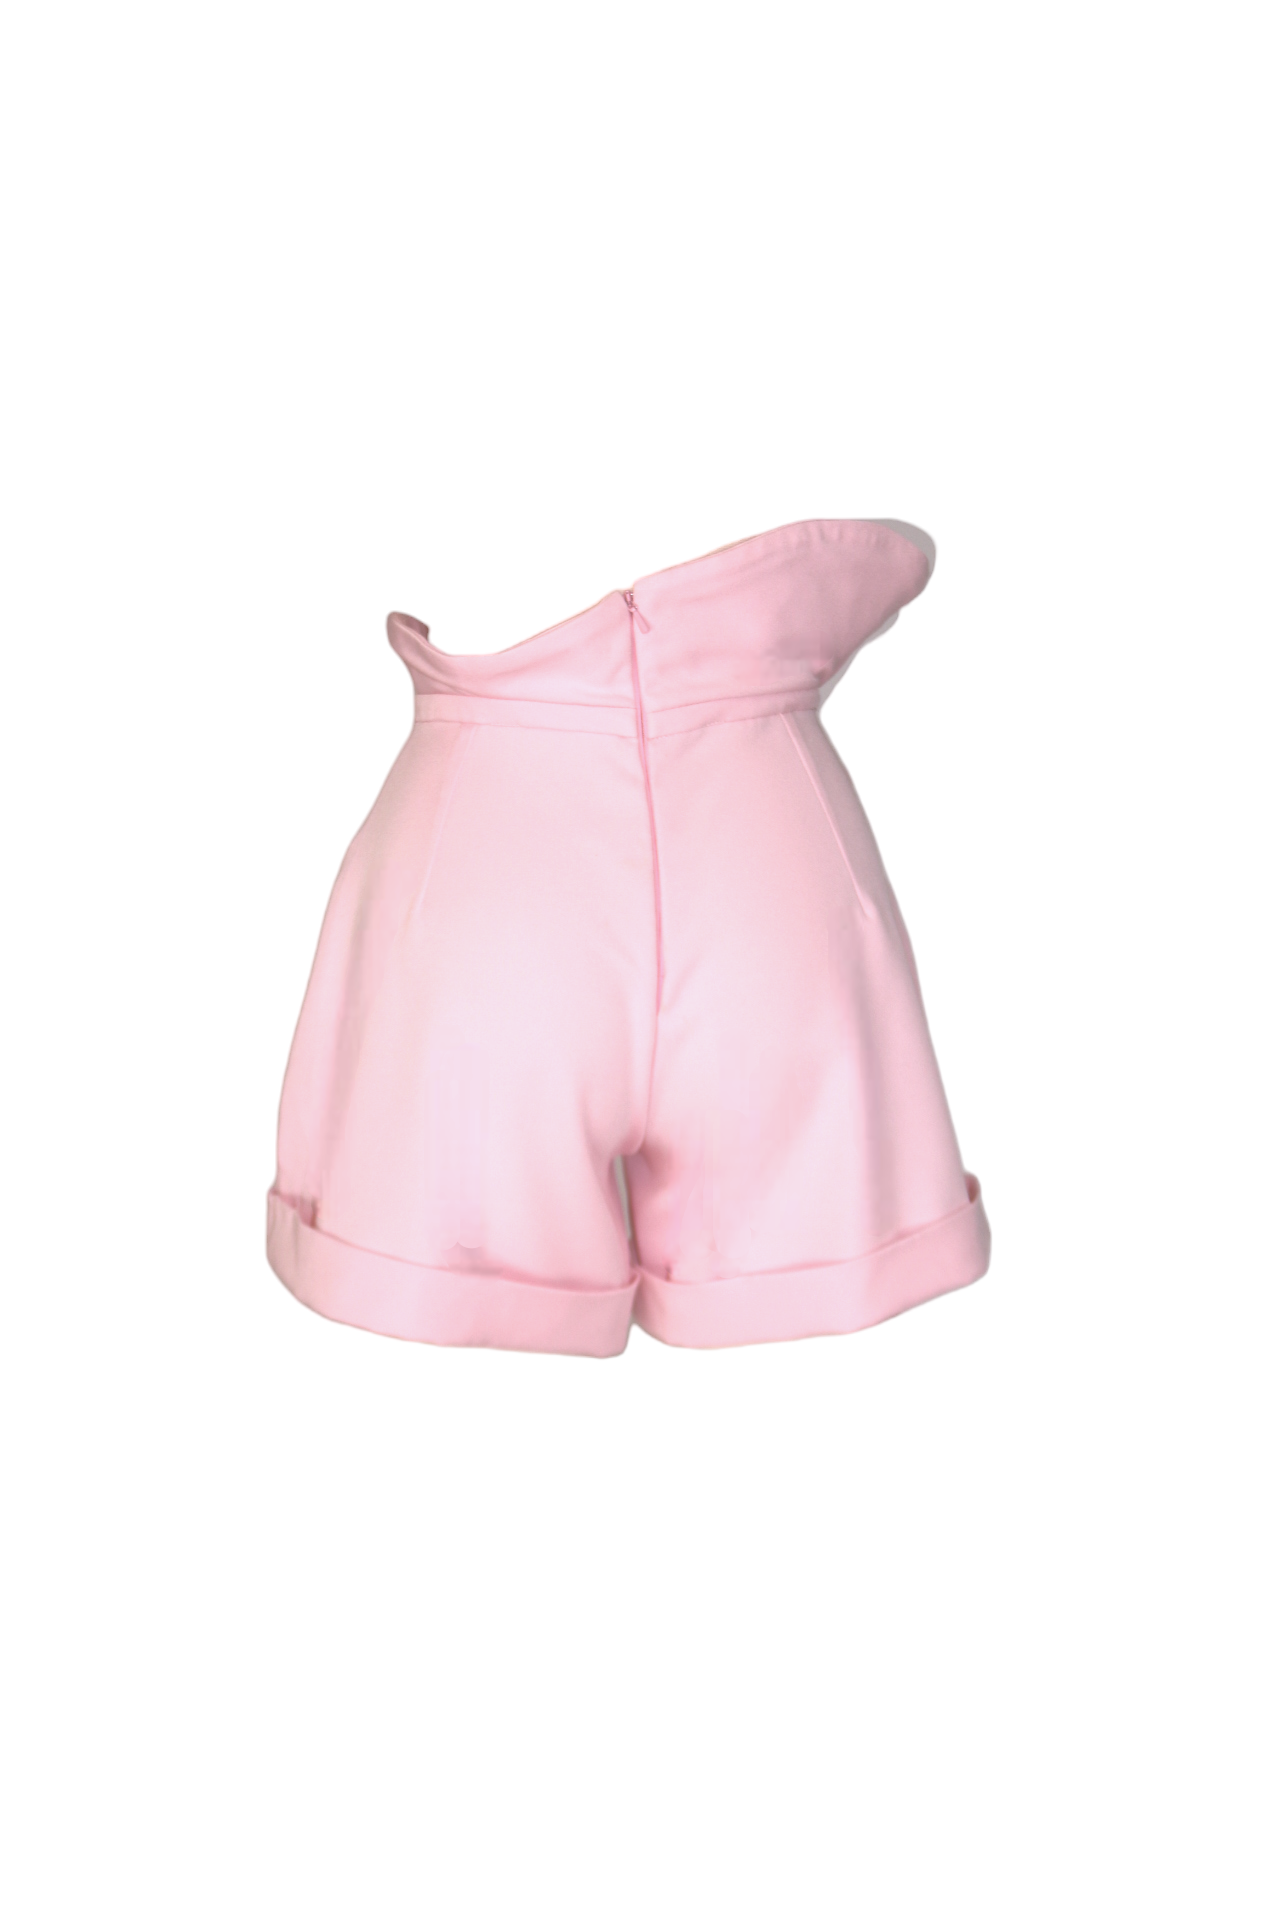 Barbie Pink Shorts